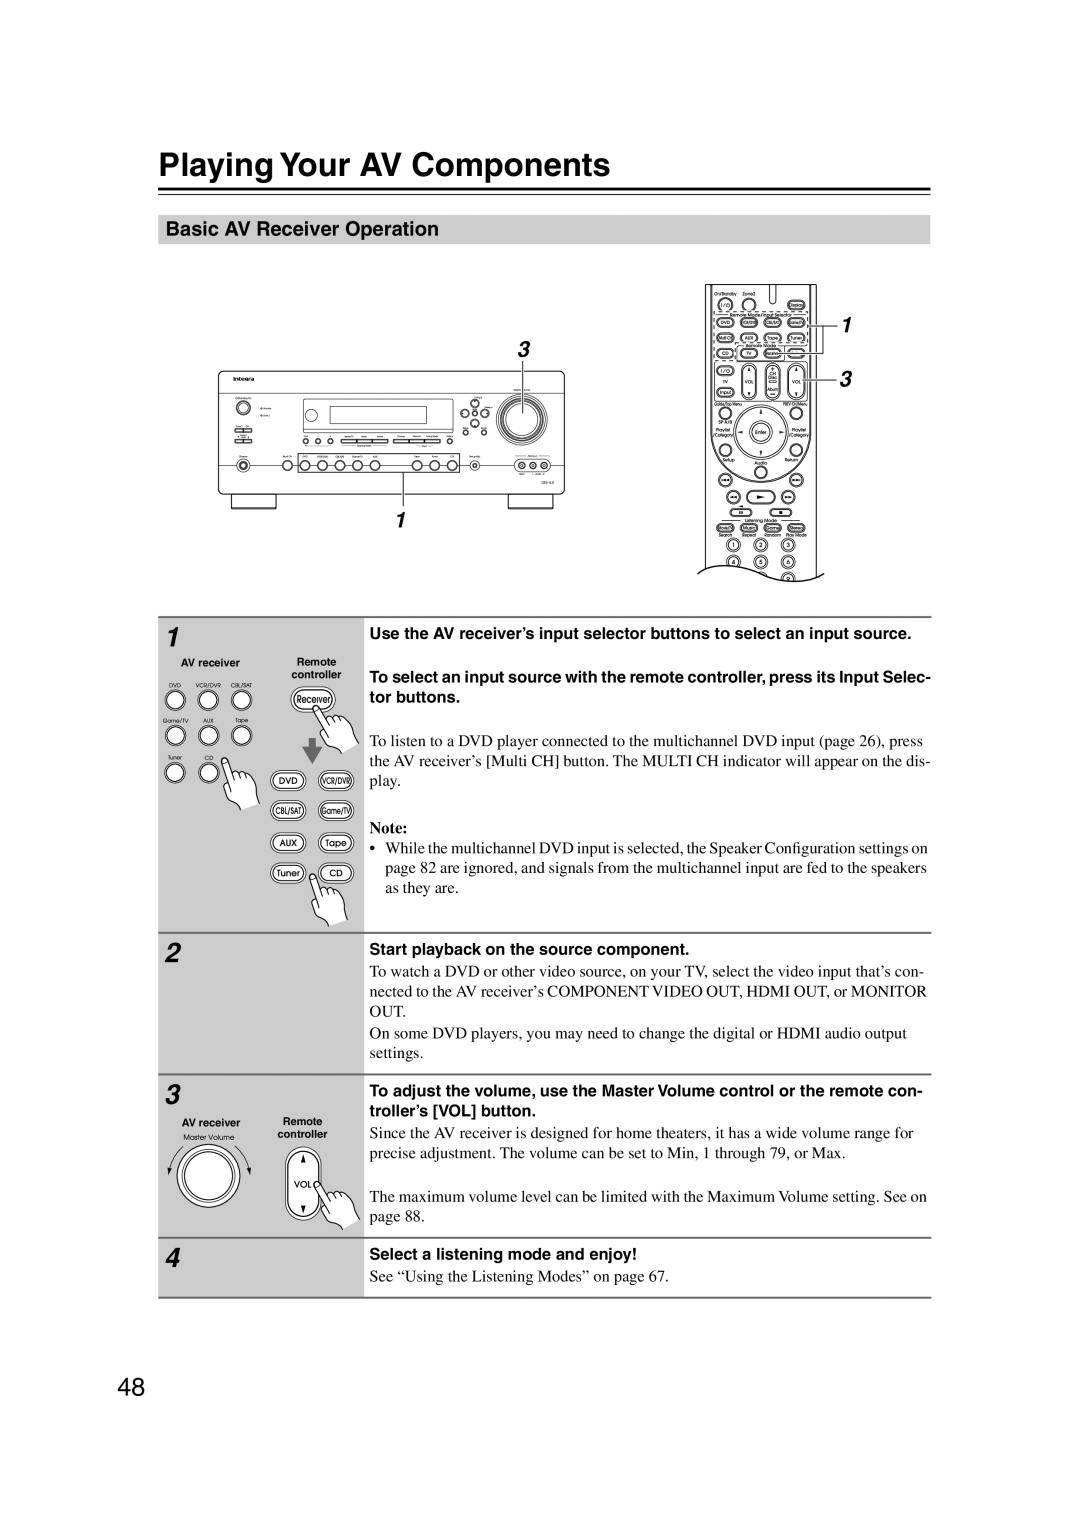 Integra DTR-5.9 instruction manual Playing Your AV Components, Basic AV Receiver Operation 